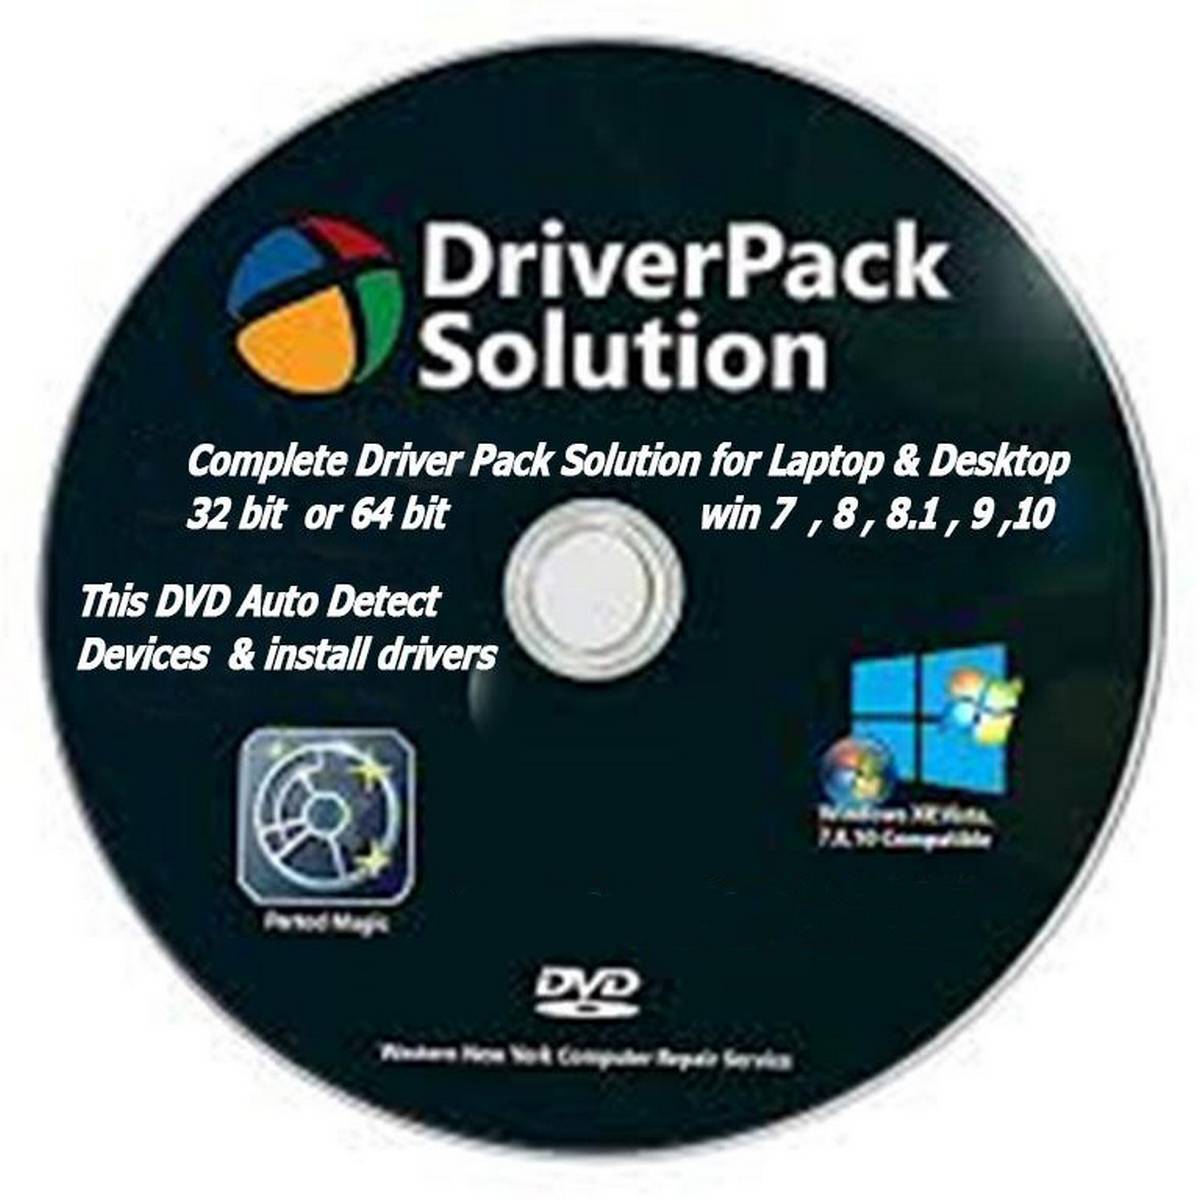 driverpack solution online windows 7 64 bit